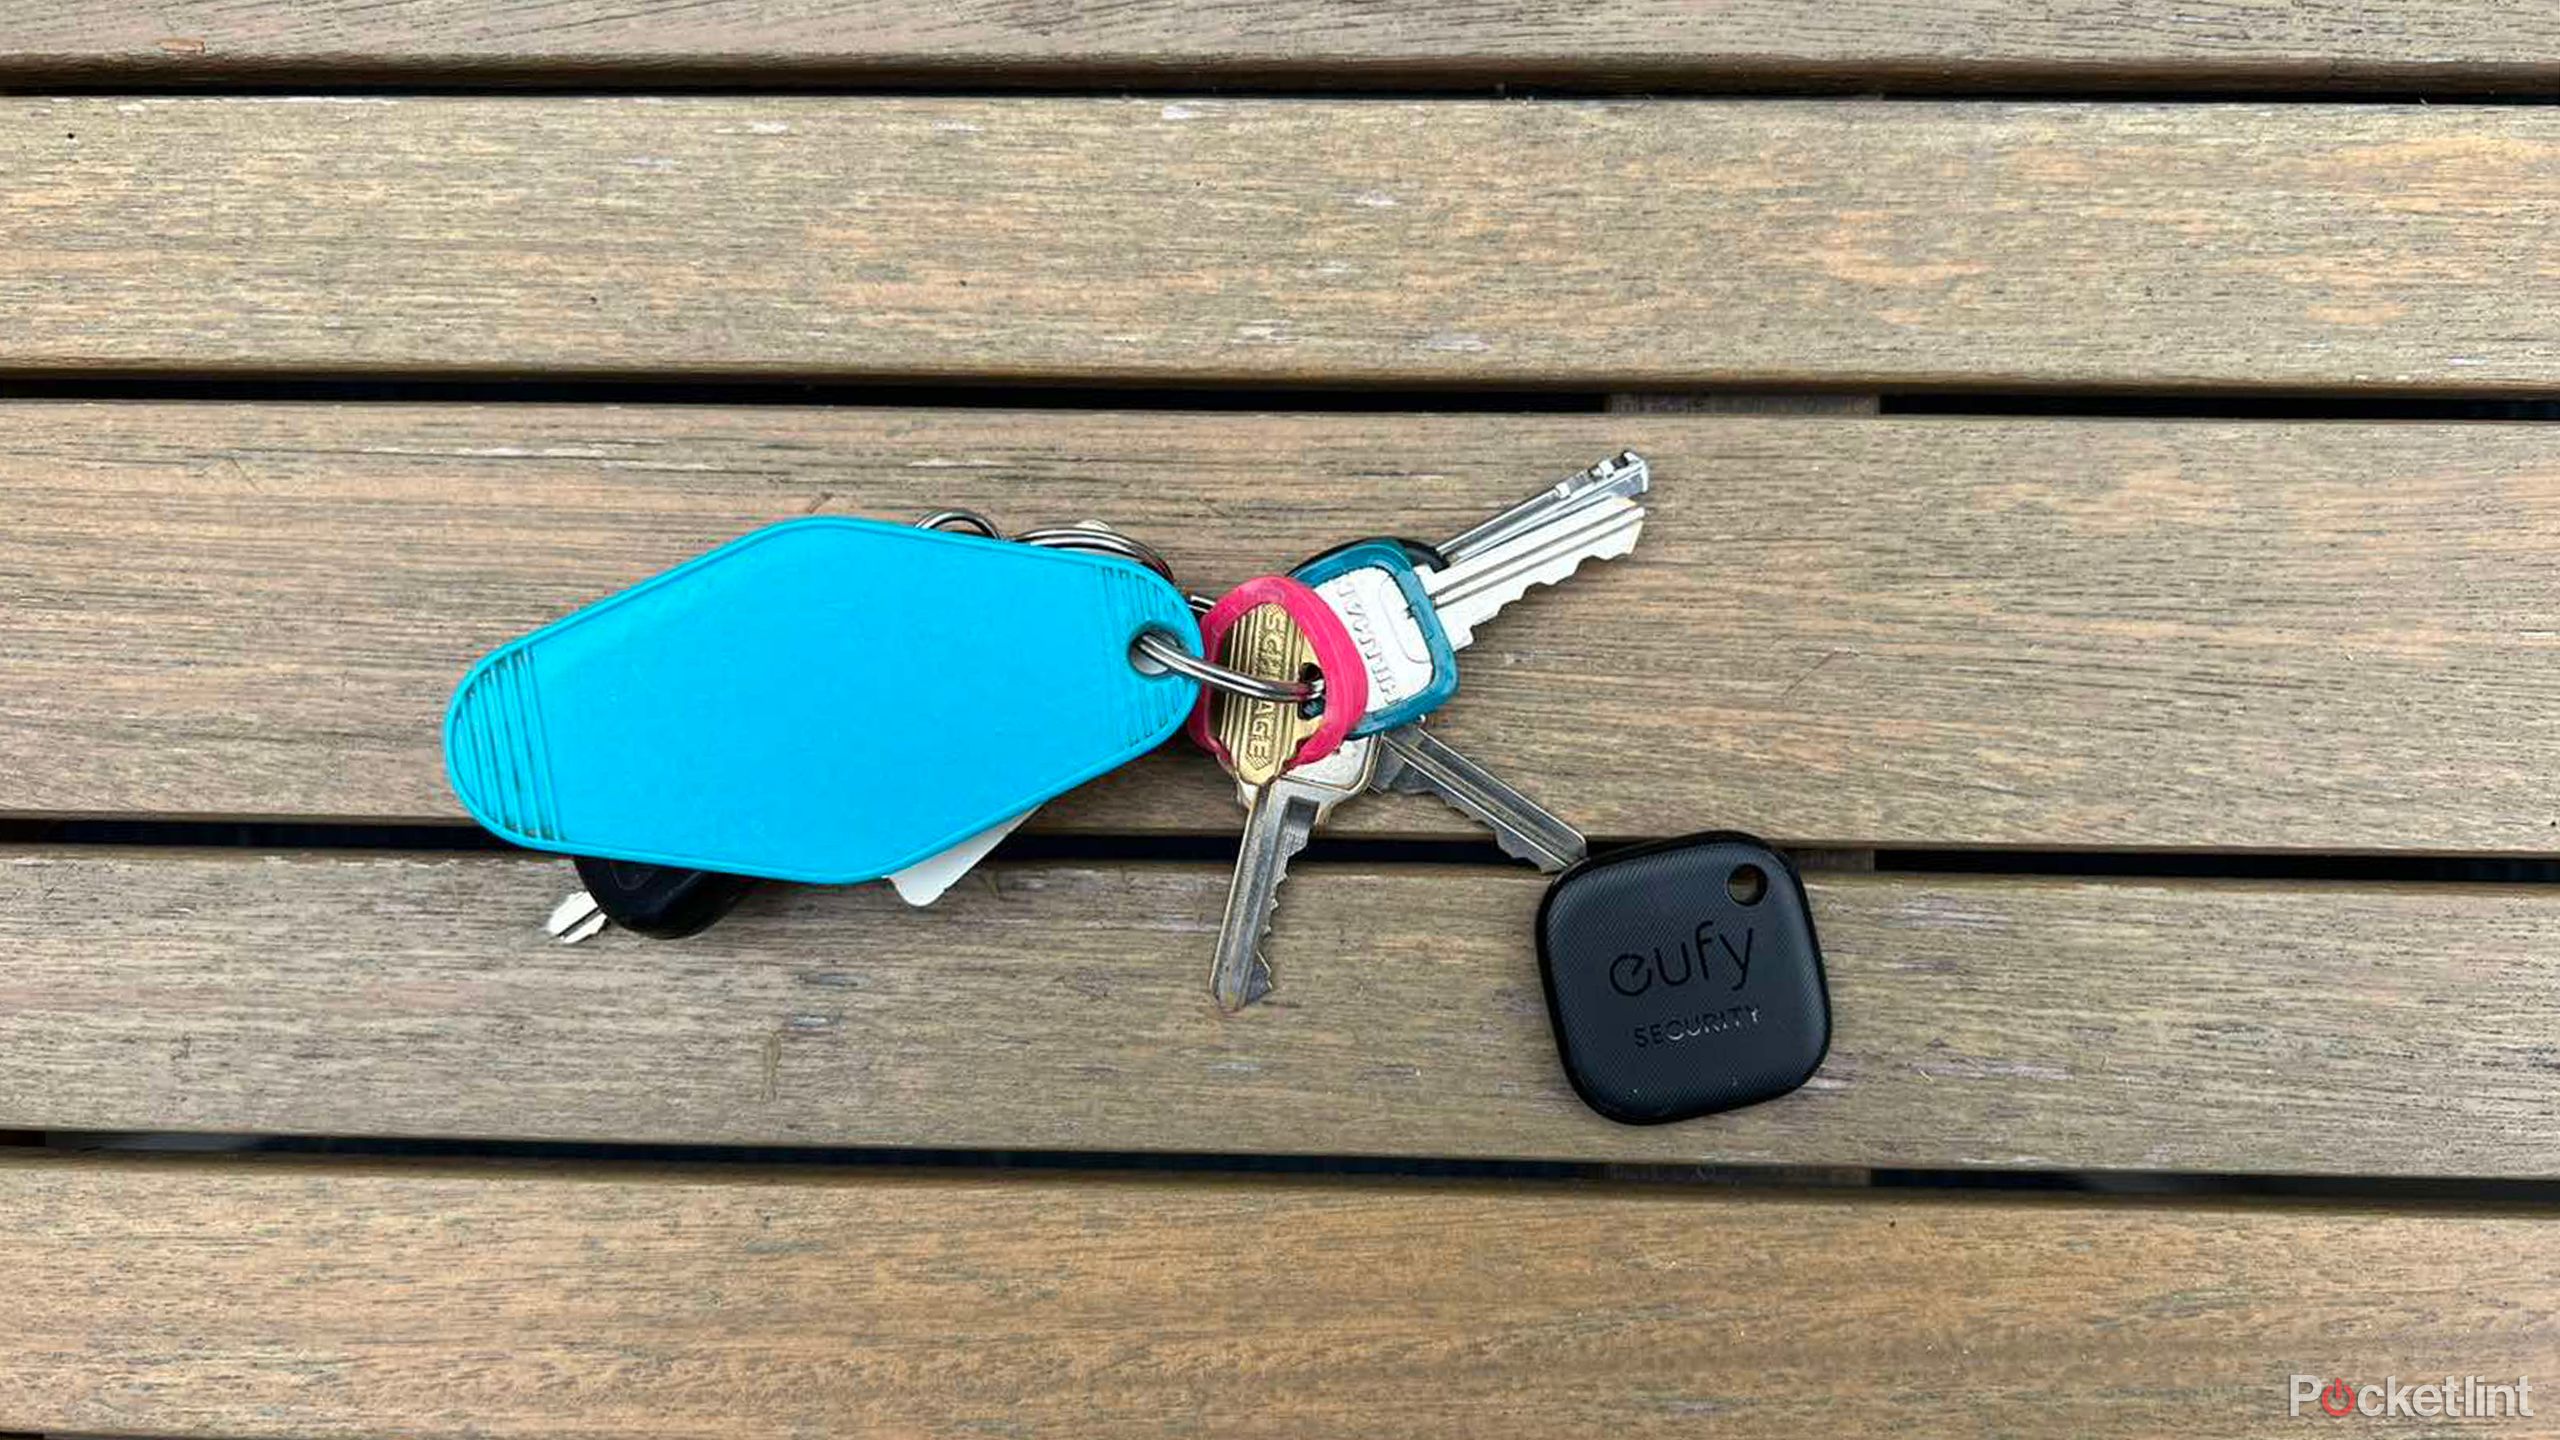 Eufy smartlink tracker on keychain